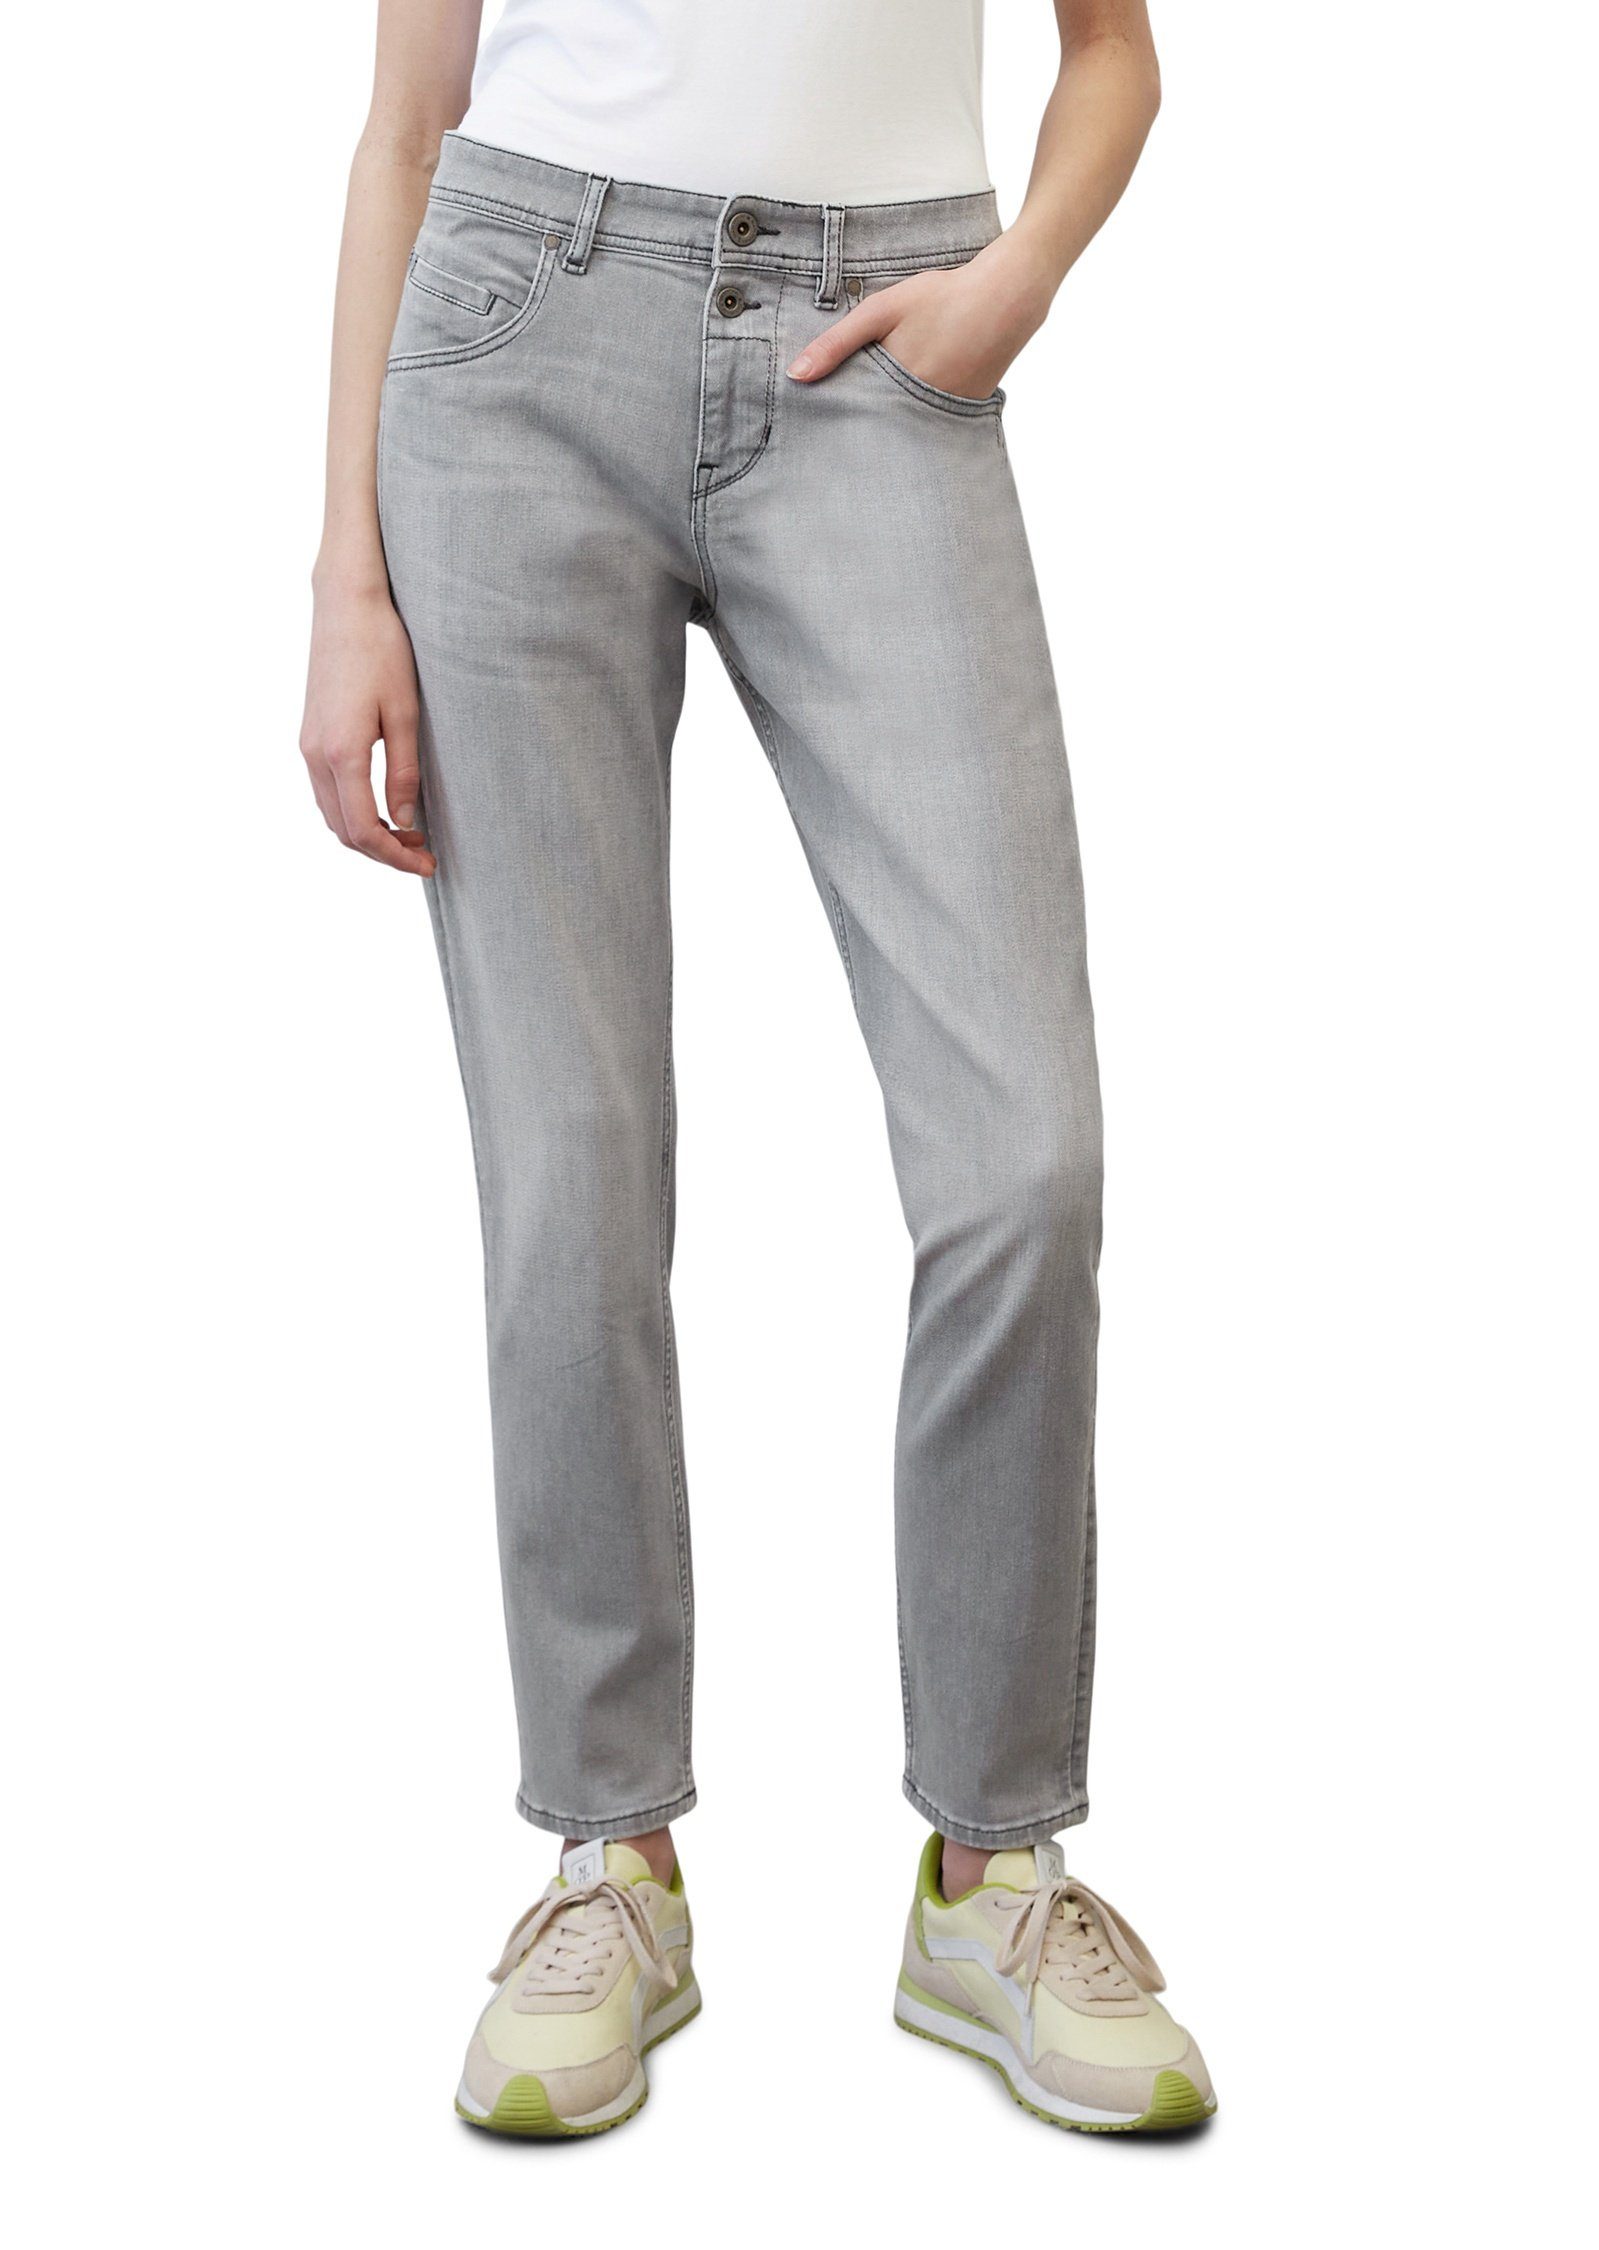 Marc O'Polo Boyfriend-Jeans aus Organic Cotton-Lyocell-Mix, Moderne Jeans-Variante  für zahlreiche Casual-Looks